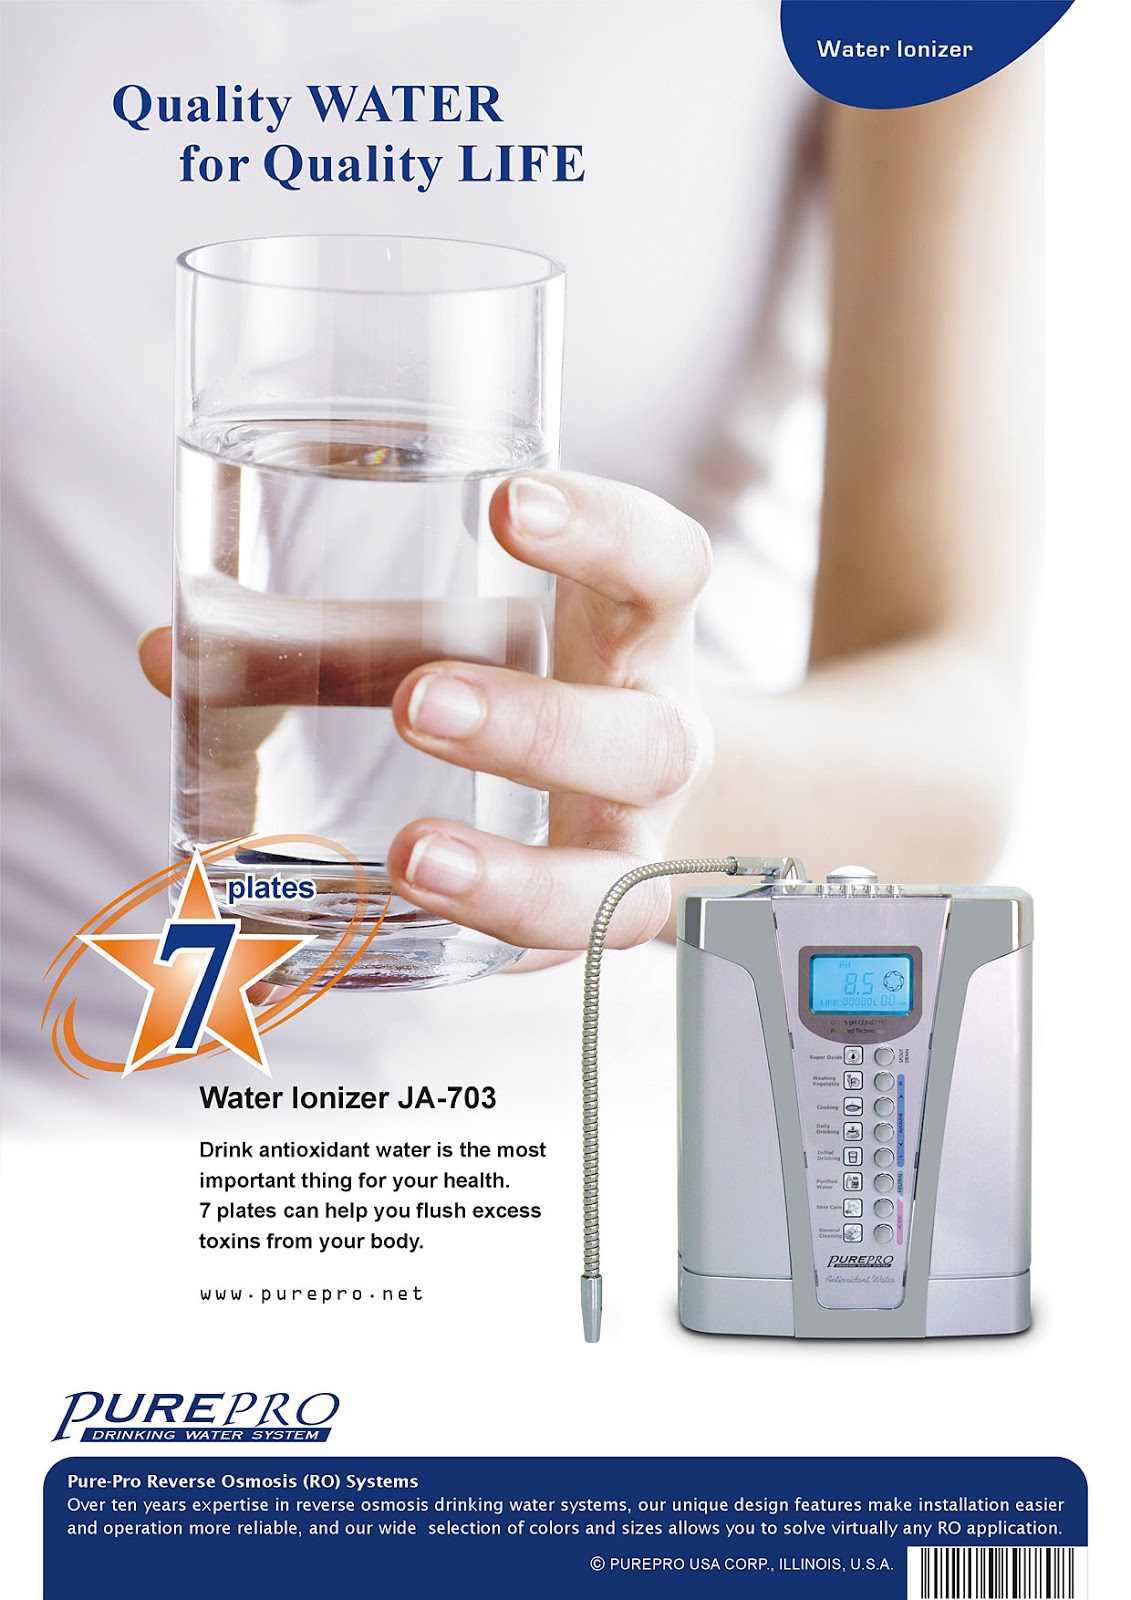 PurePro USA Water Ionizer JA-703